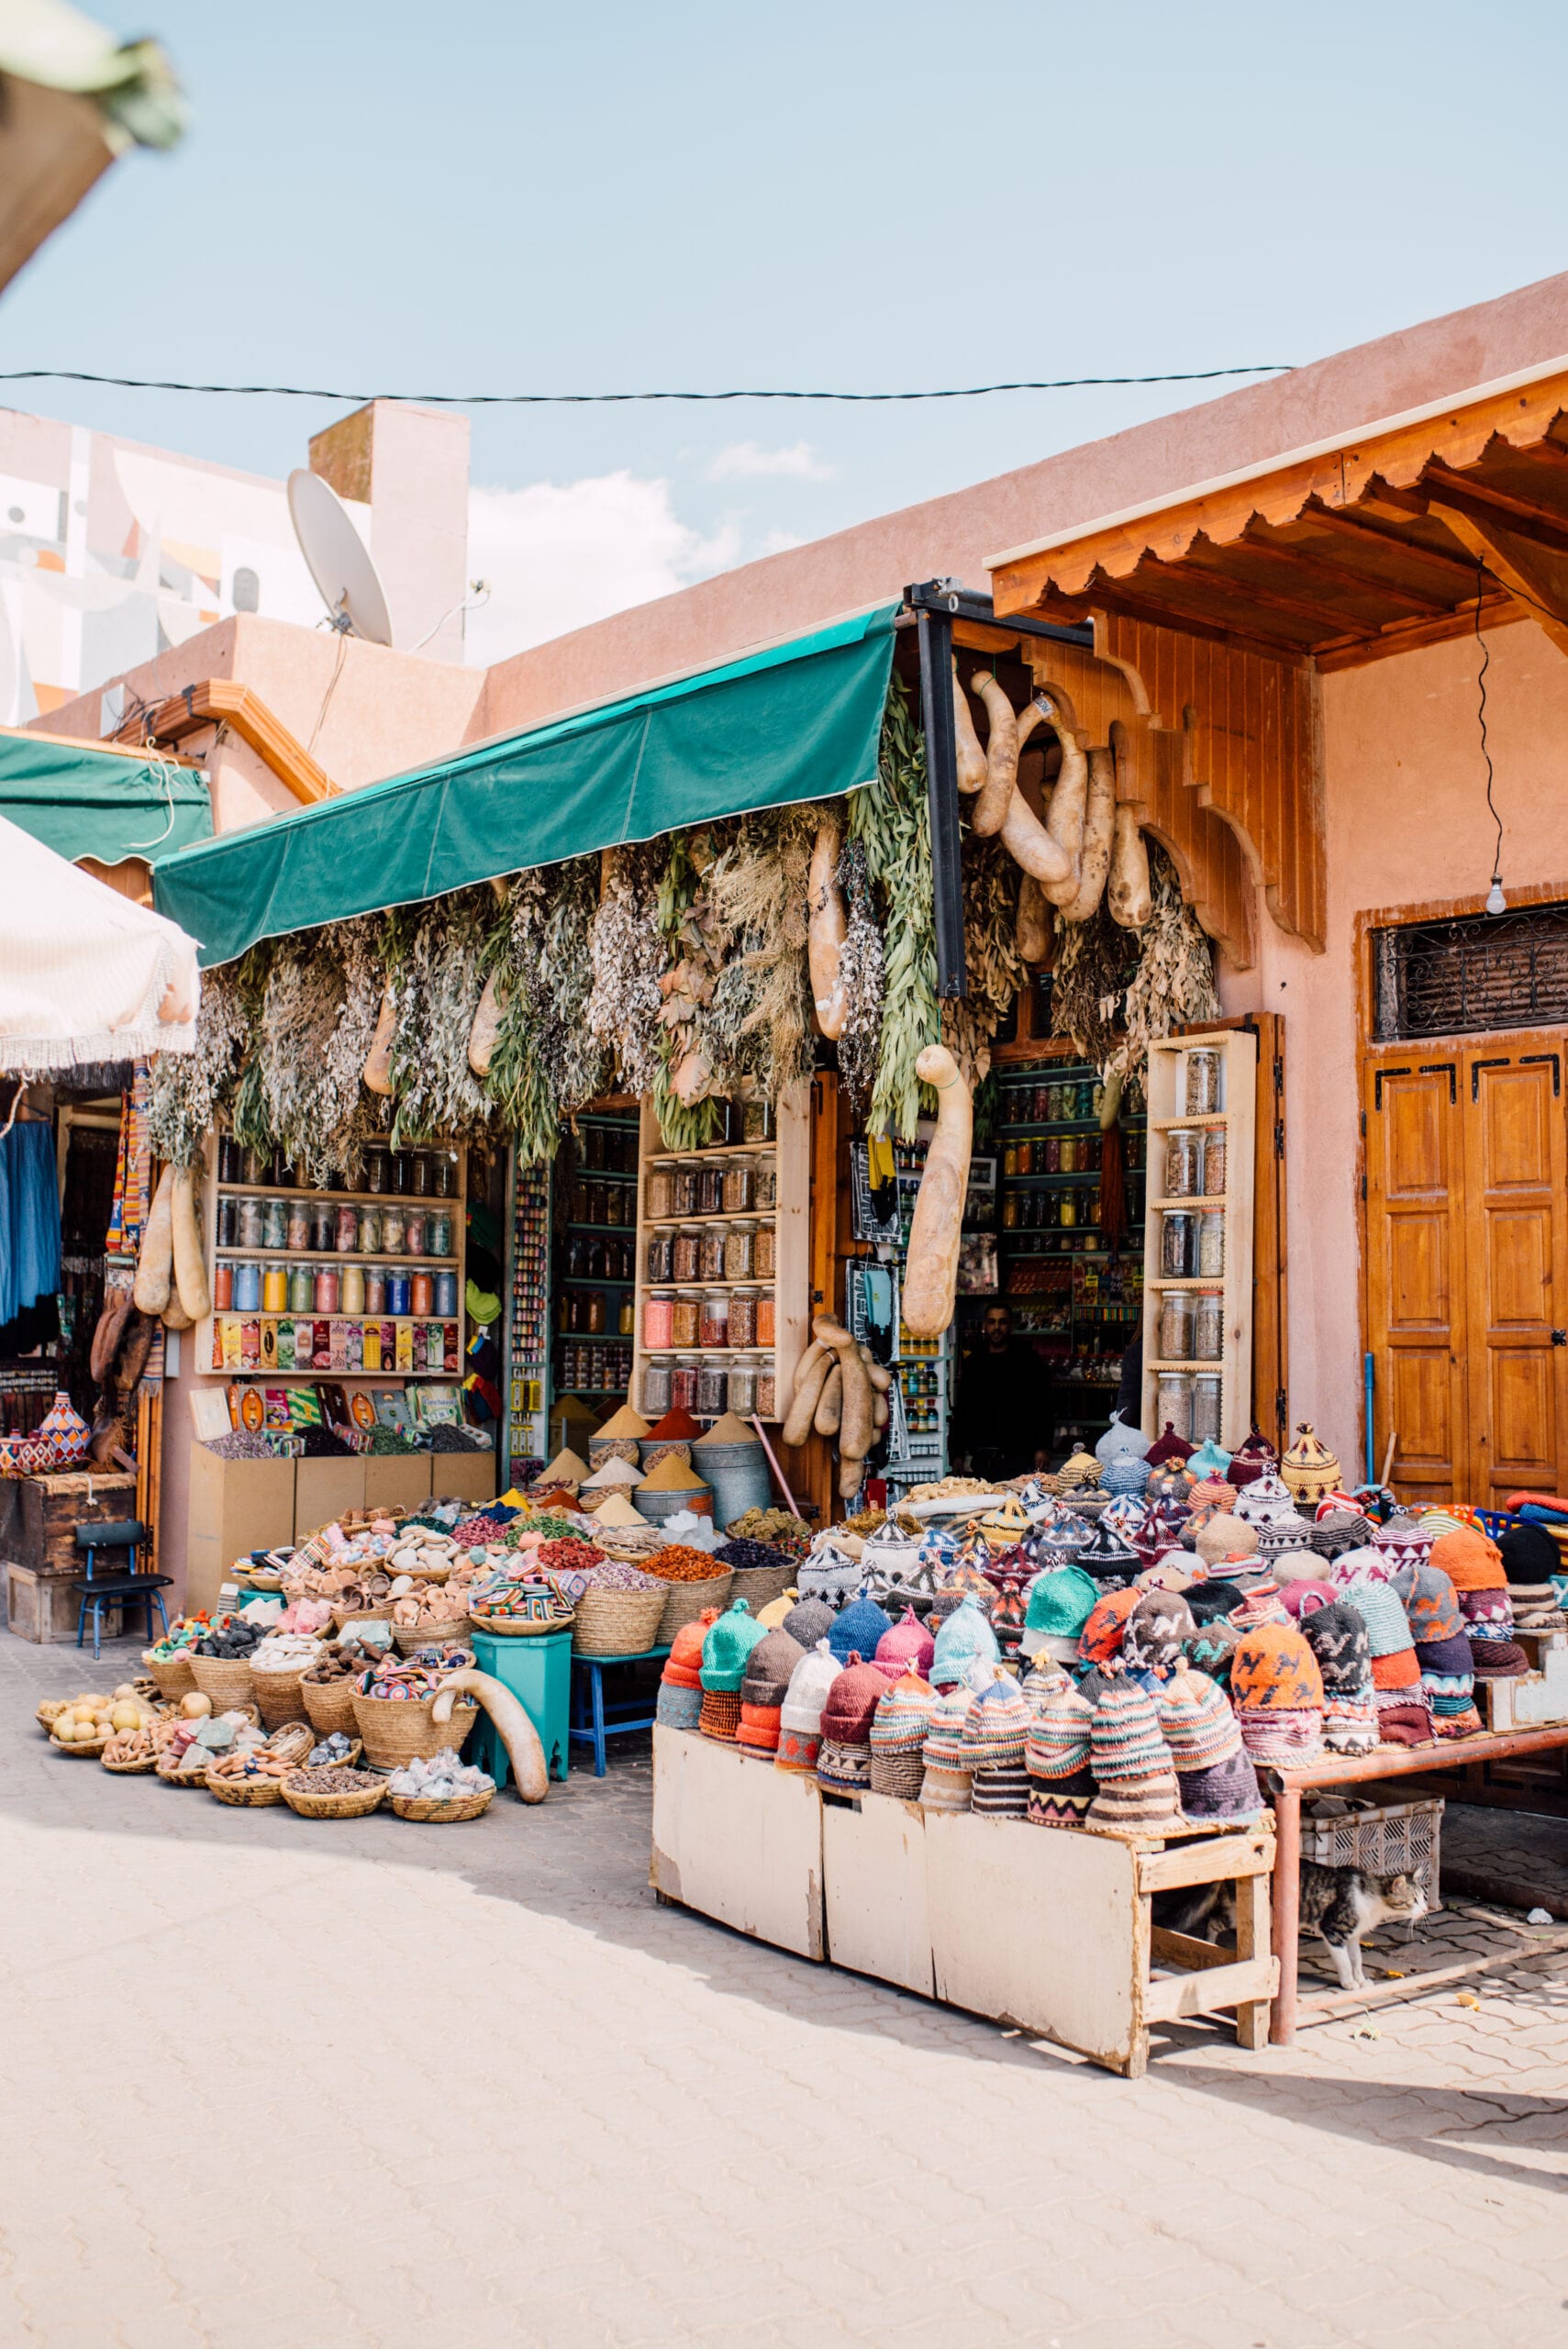 morocco travel department